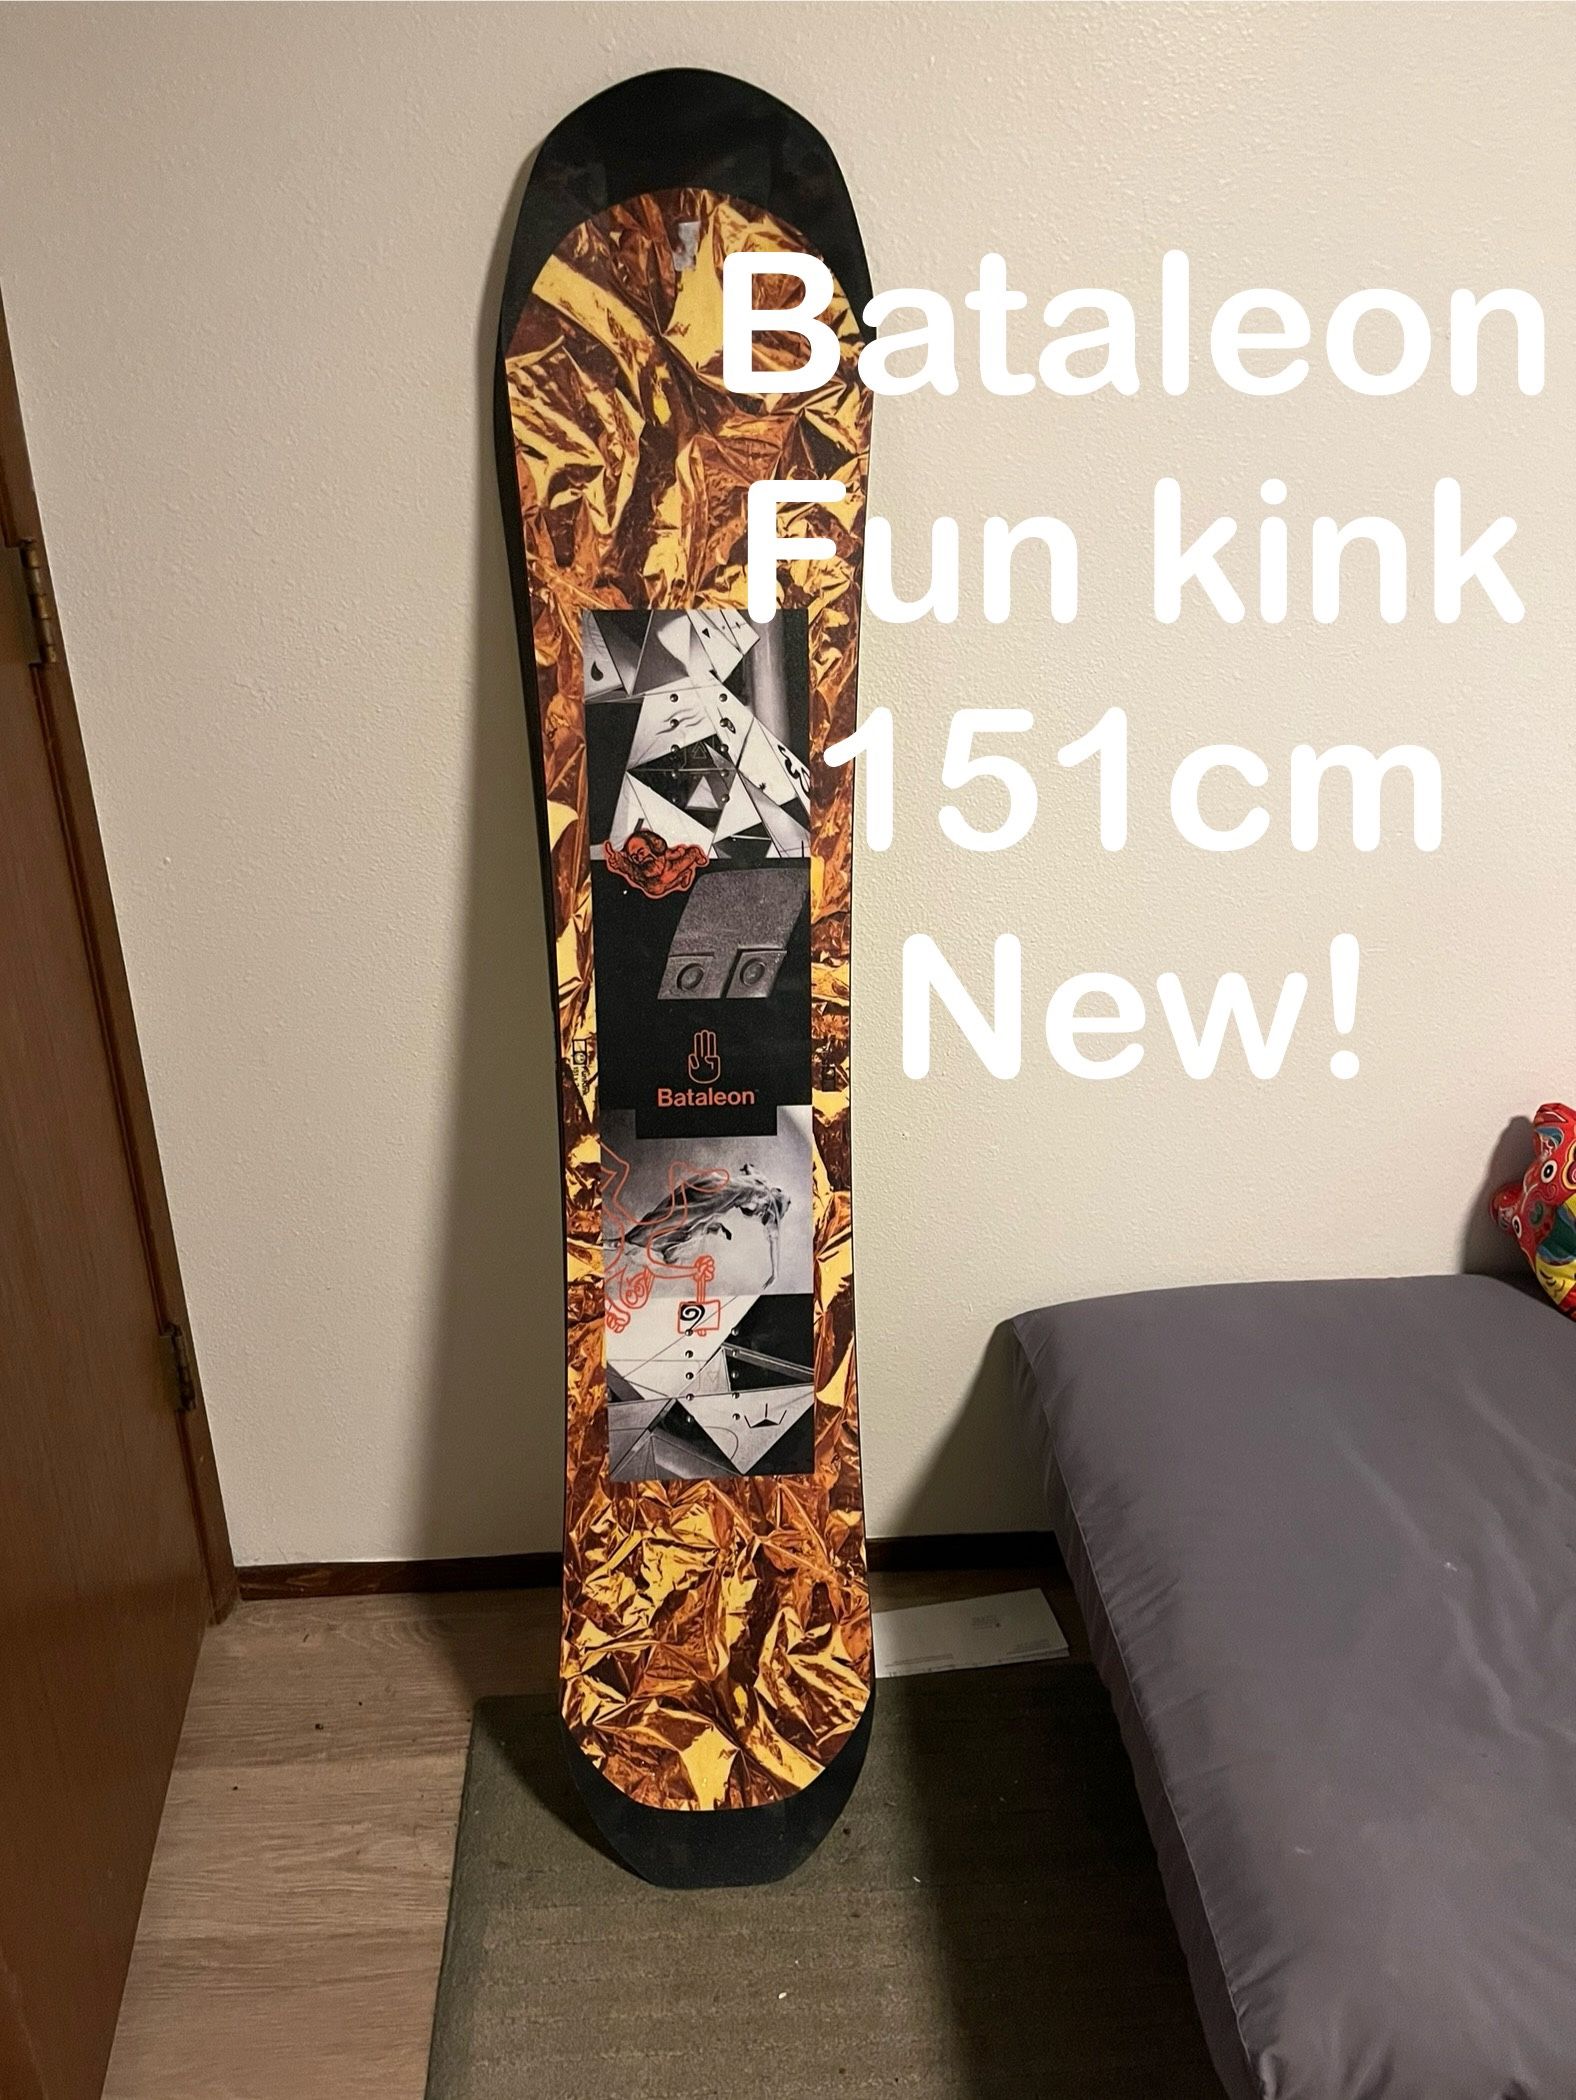 Bataleon Fun kink 151